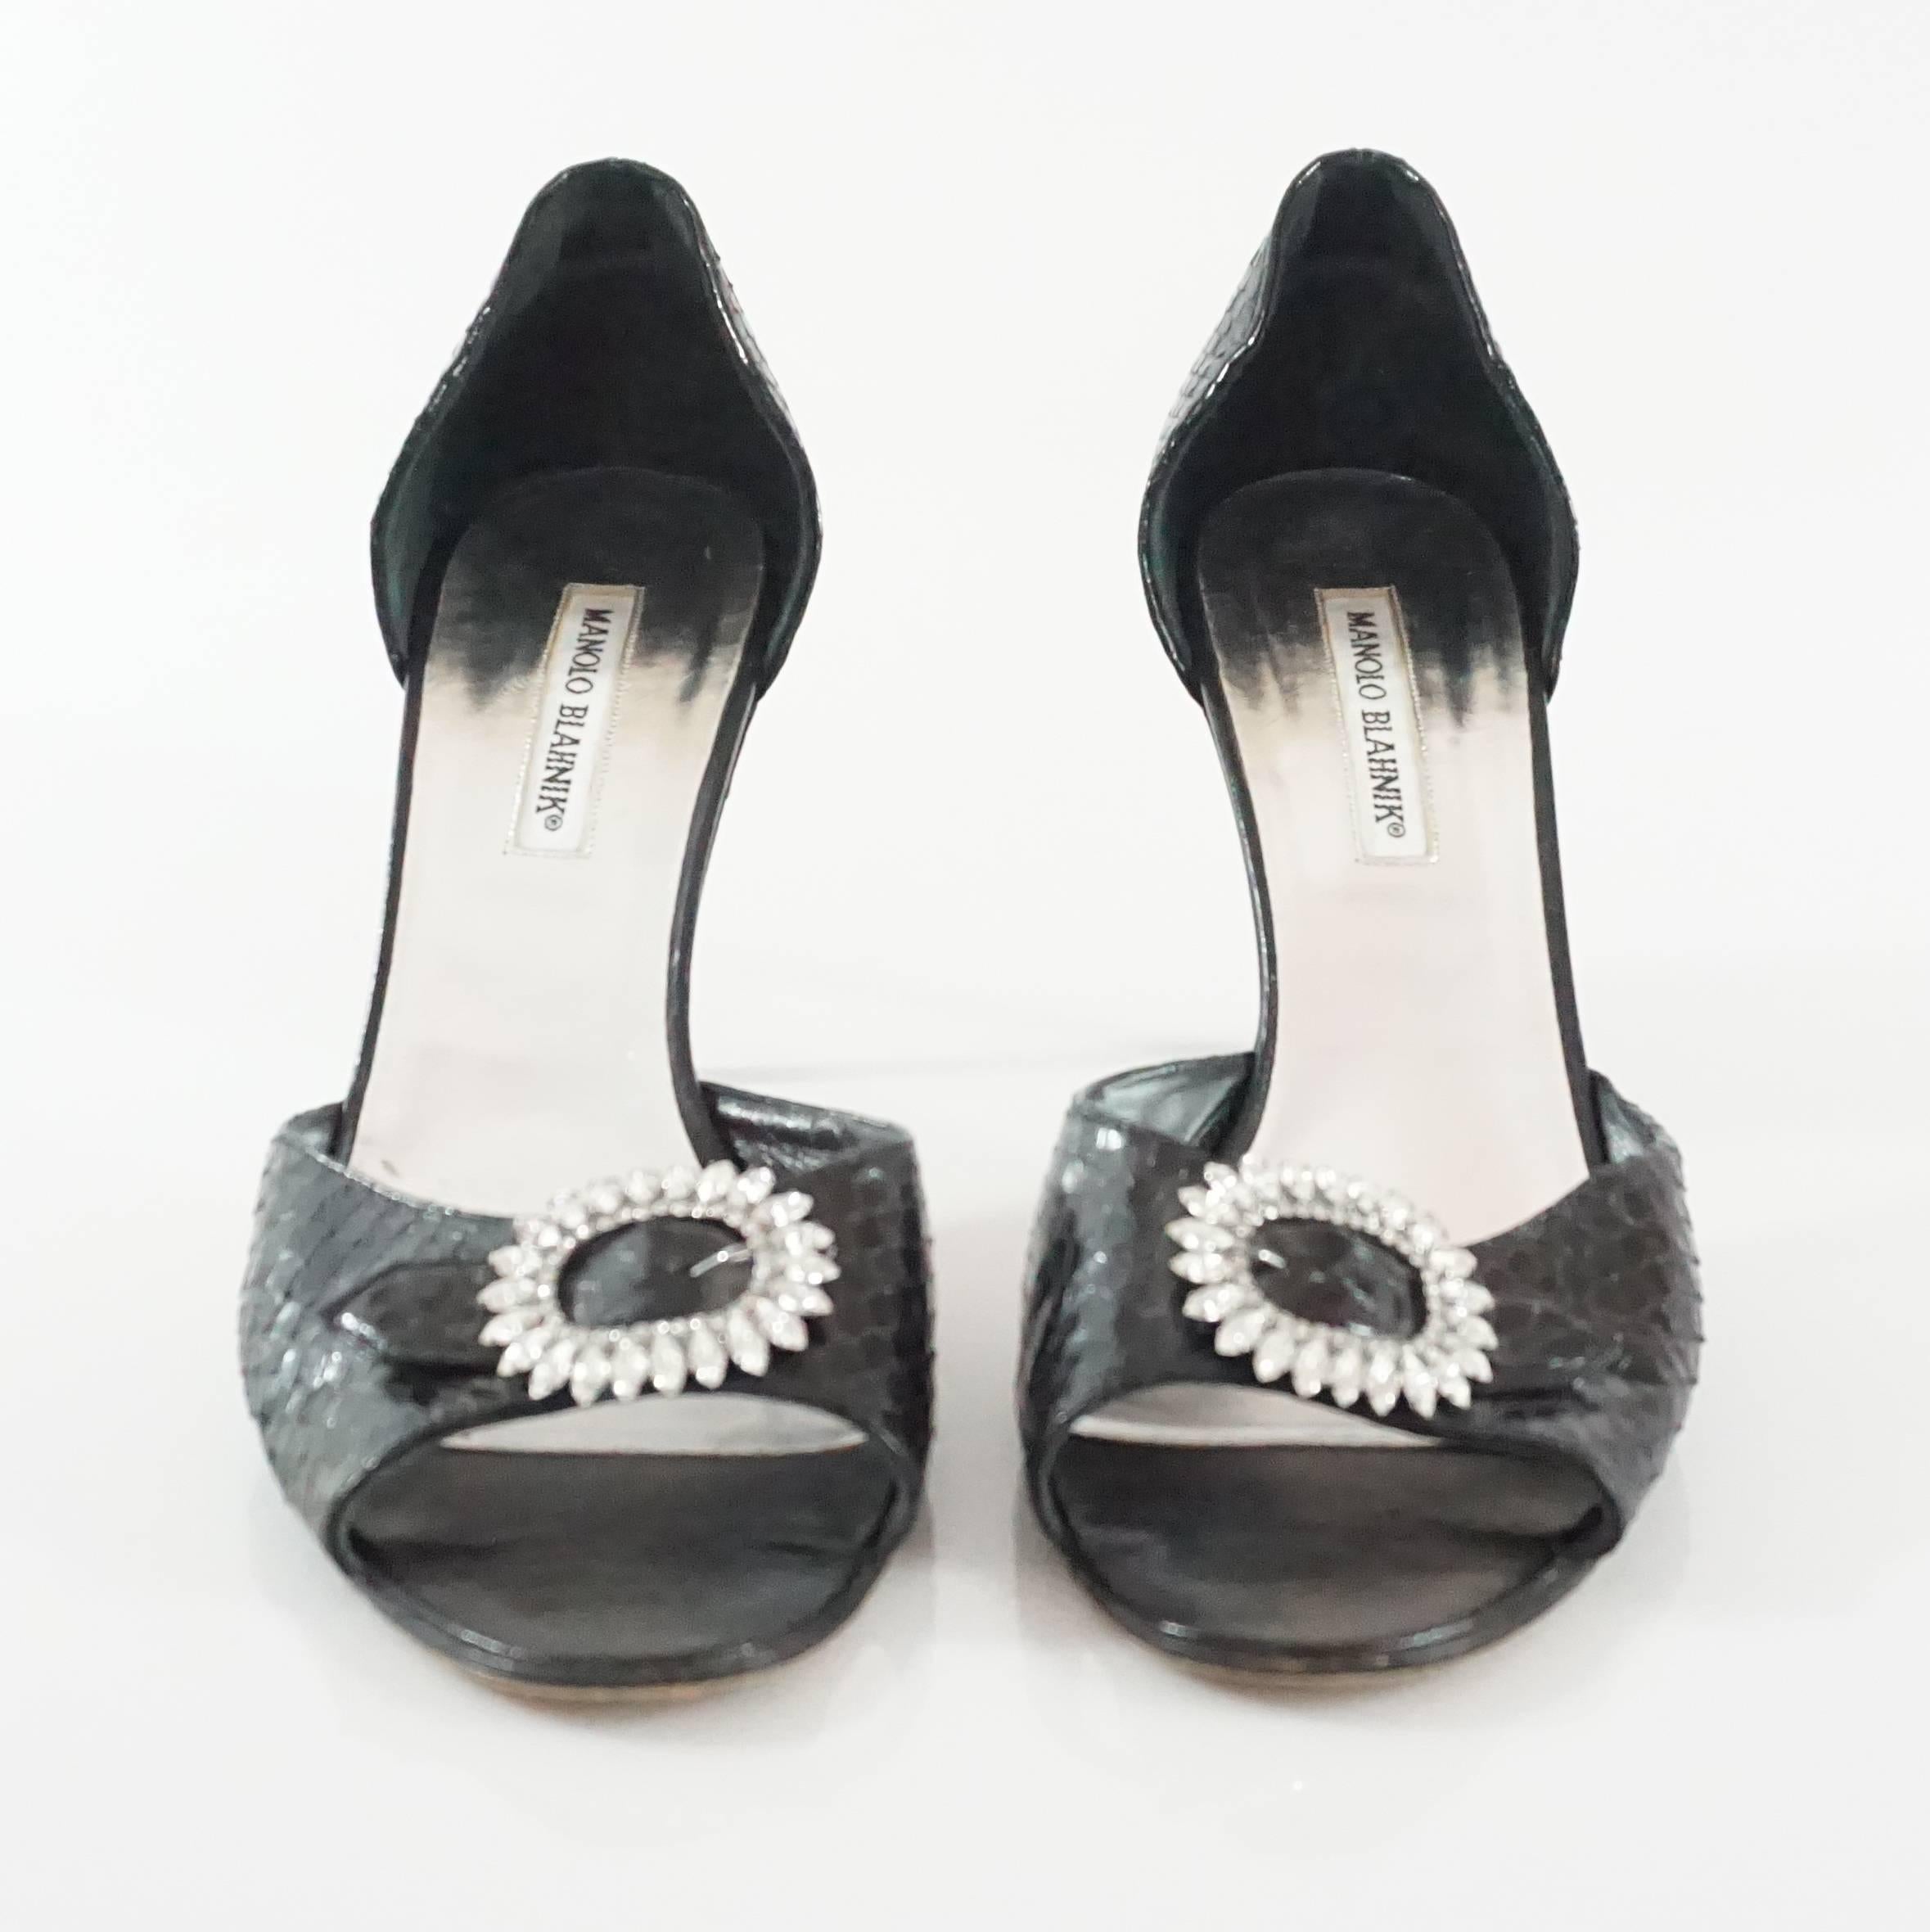 black heels with rhinestones